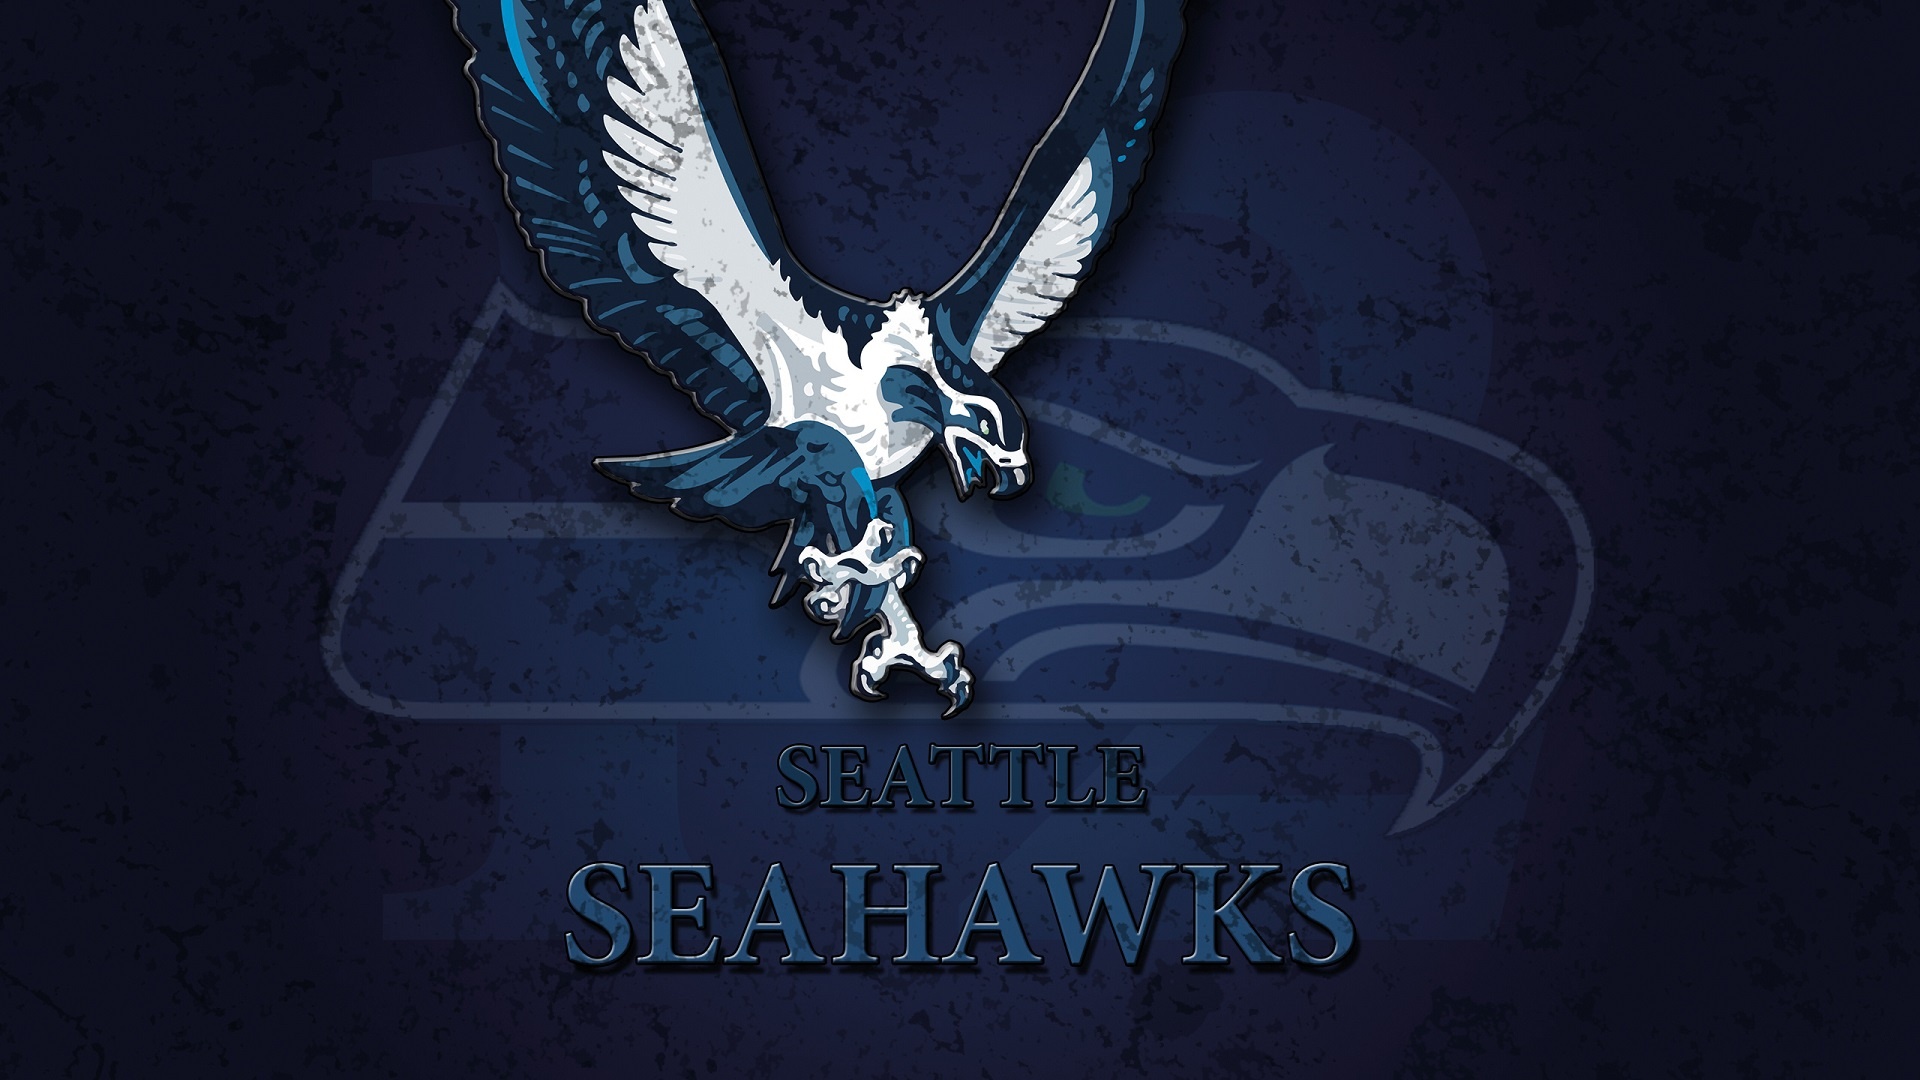 Seahawks 1920x1080 wallpaper